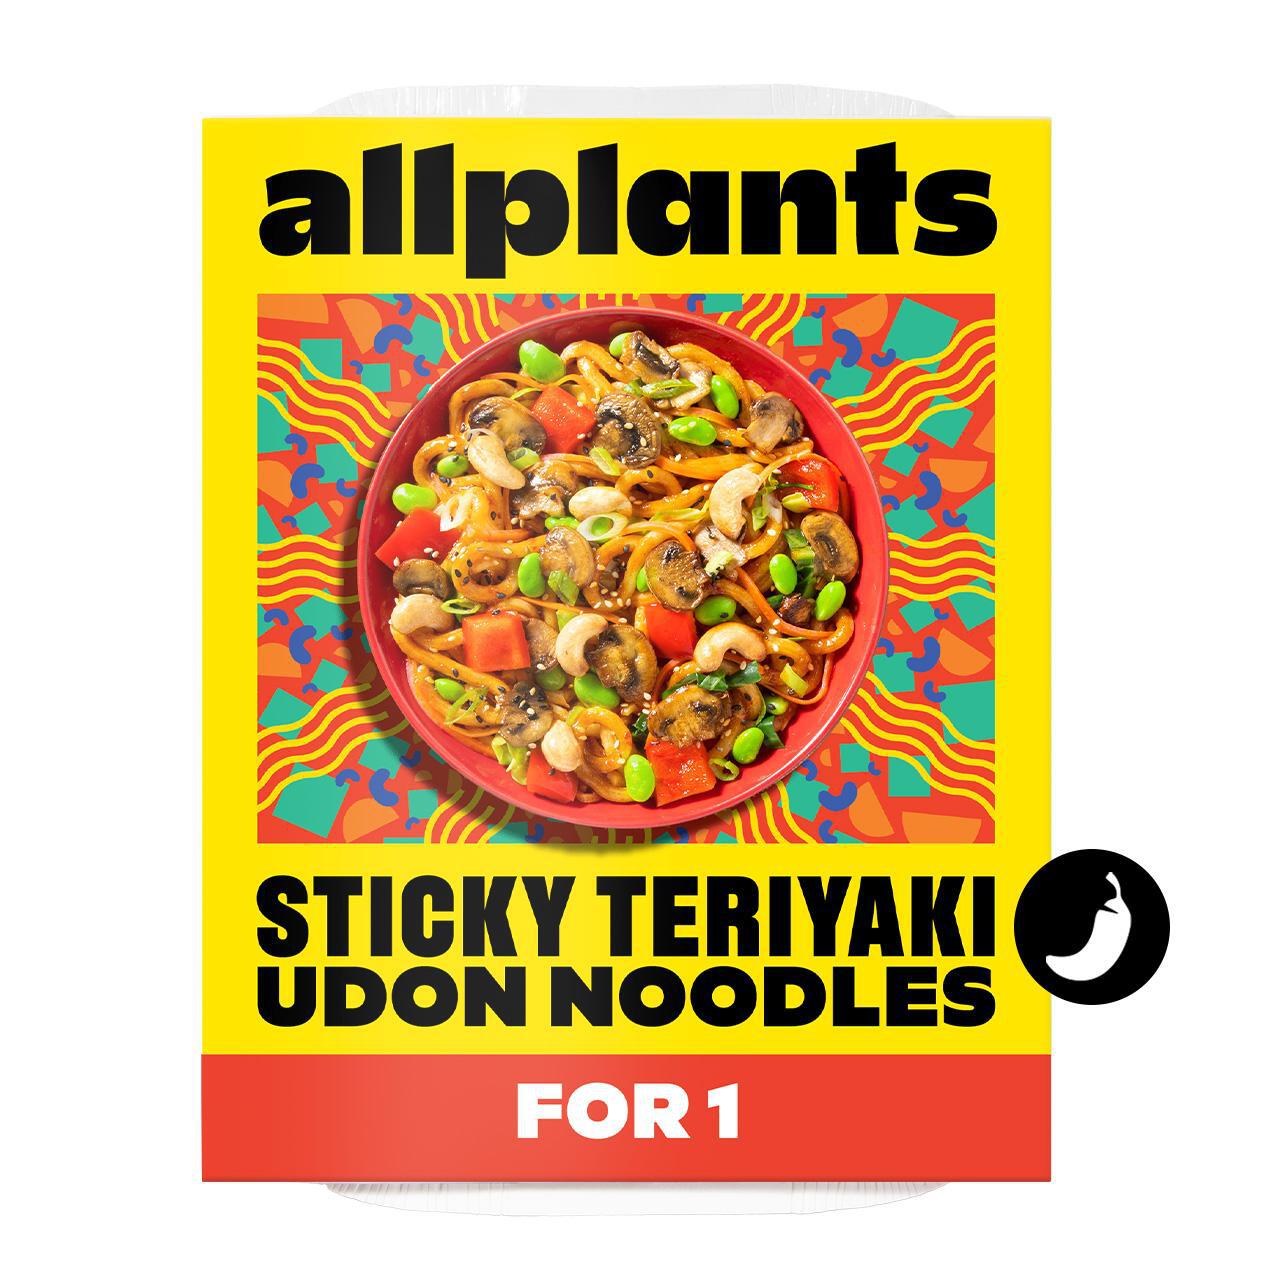 allplants Sticky Teriyaki Udon Noodles for 1 351g